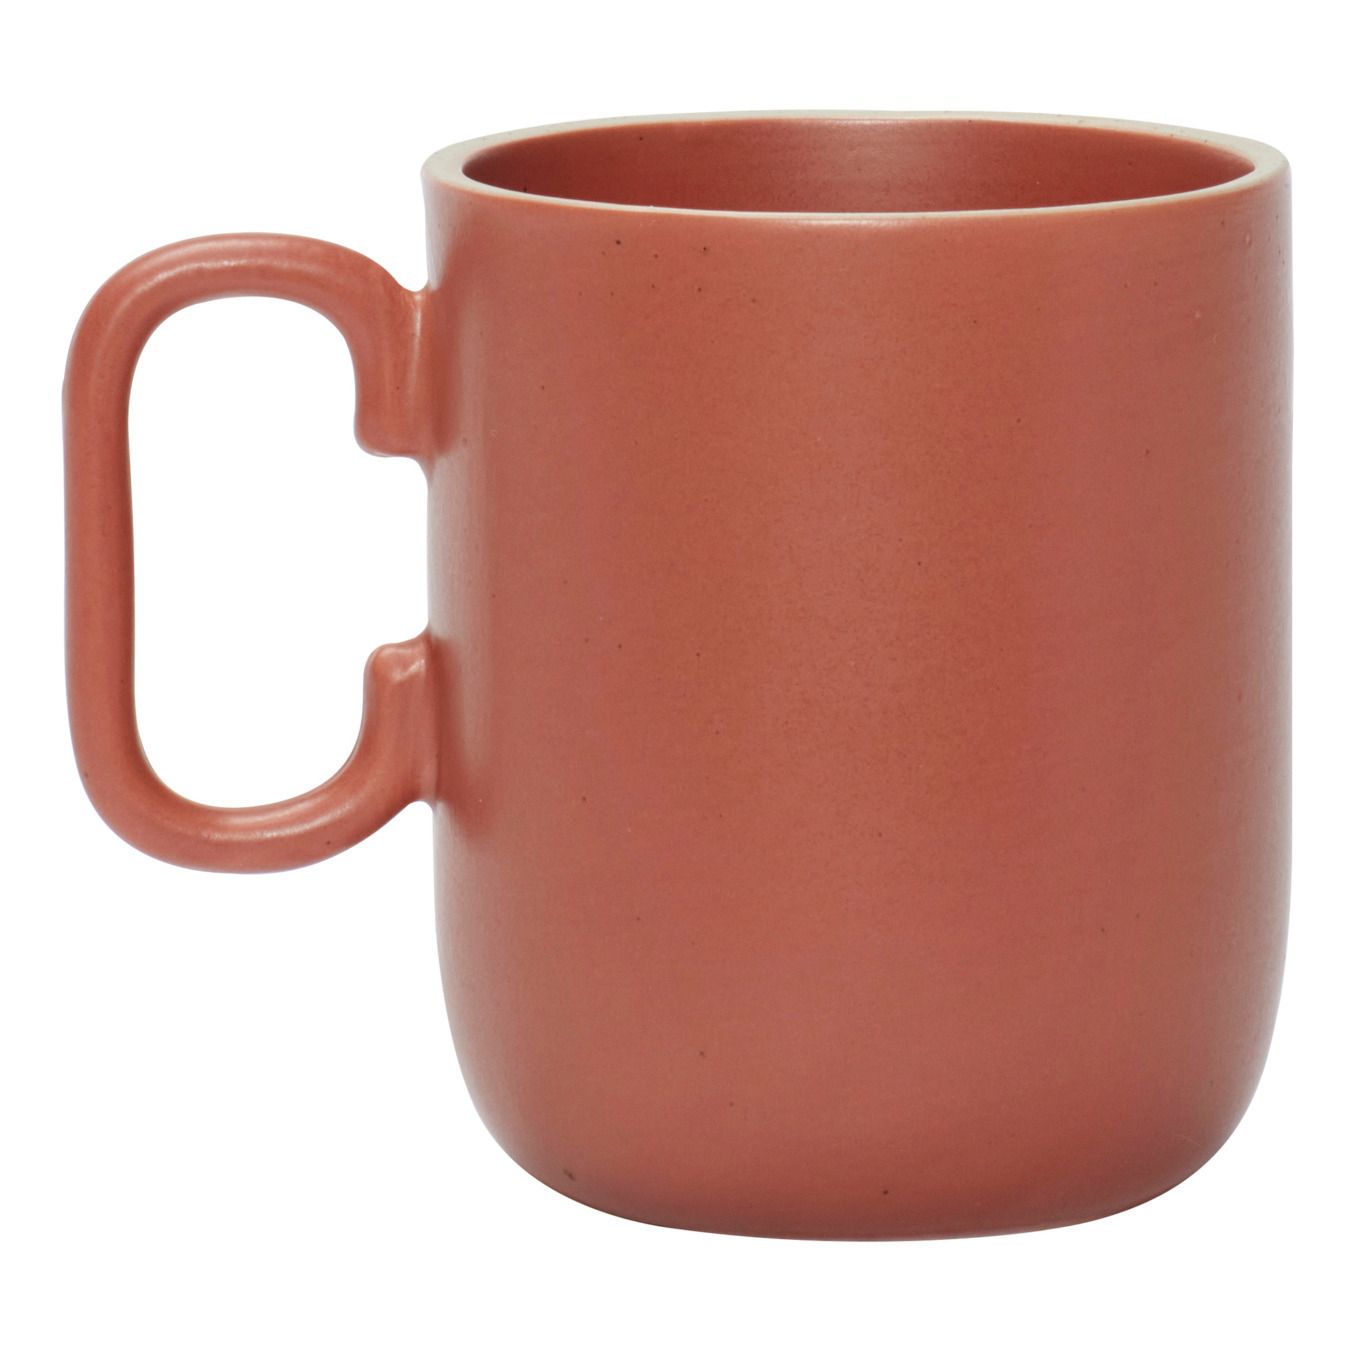 Hubsch - Mug en céramique - Rouge brique